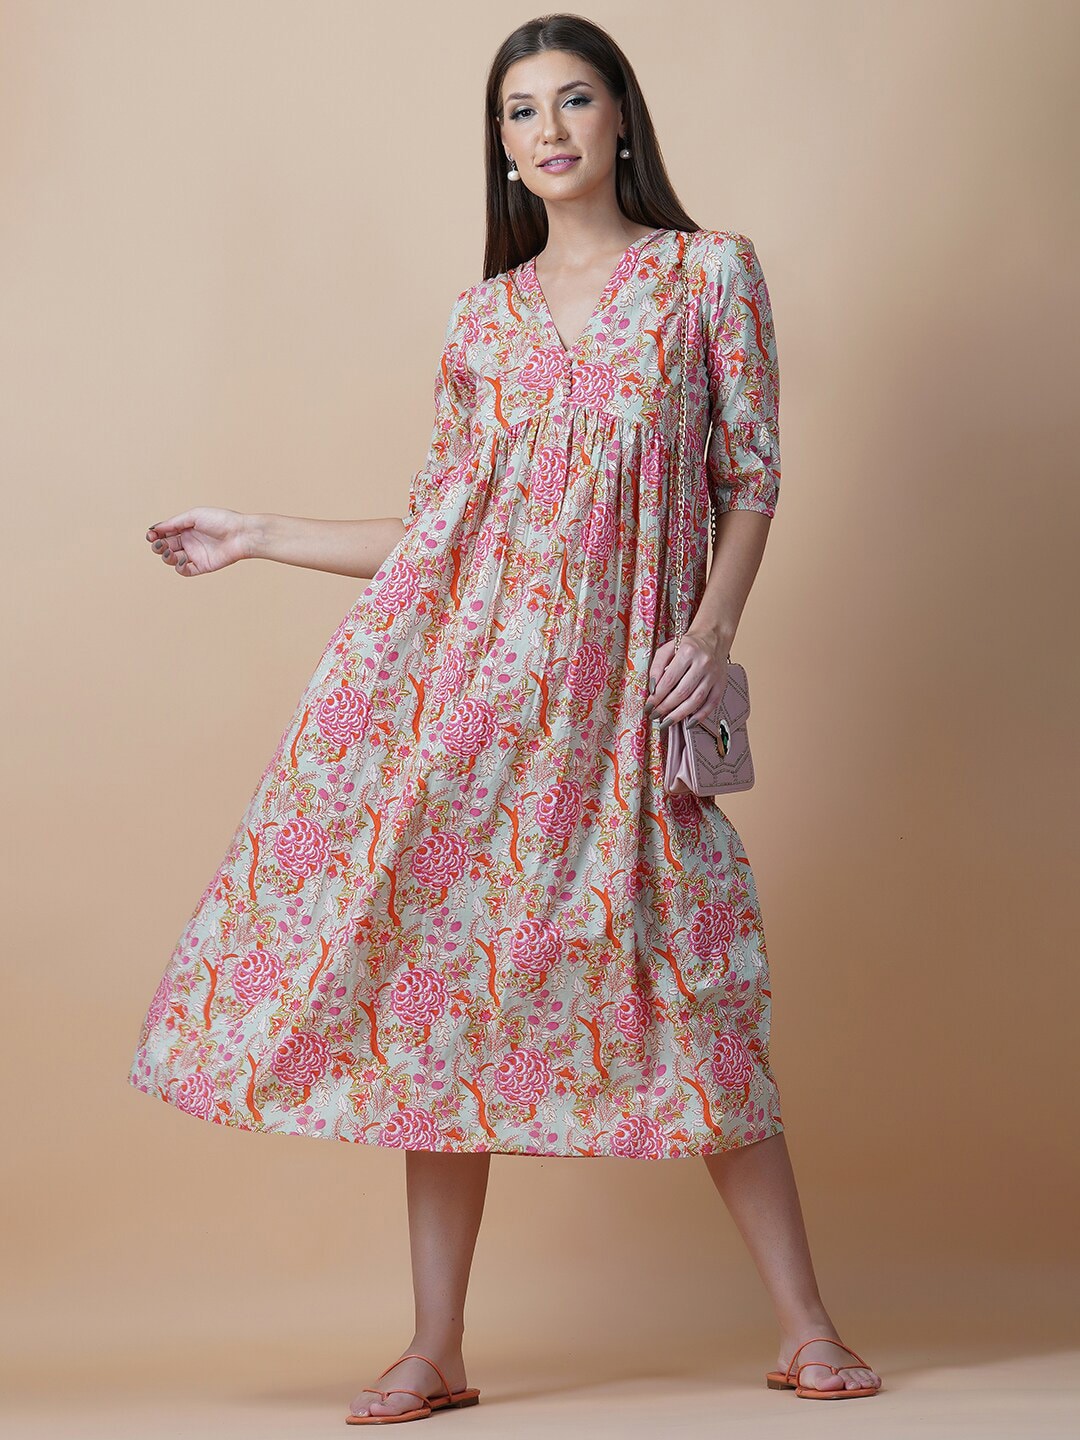 Twilldor Green & Pink Cotton Floral Ethnic Midi Dress Price in India